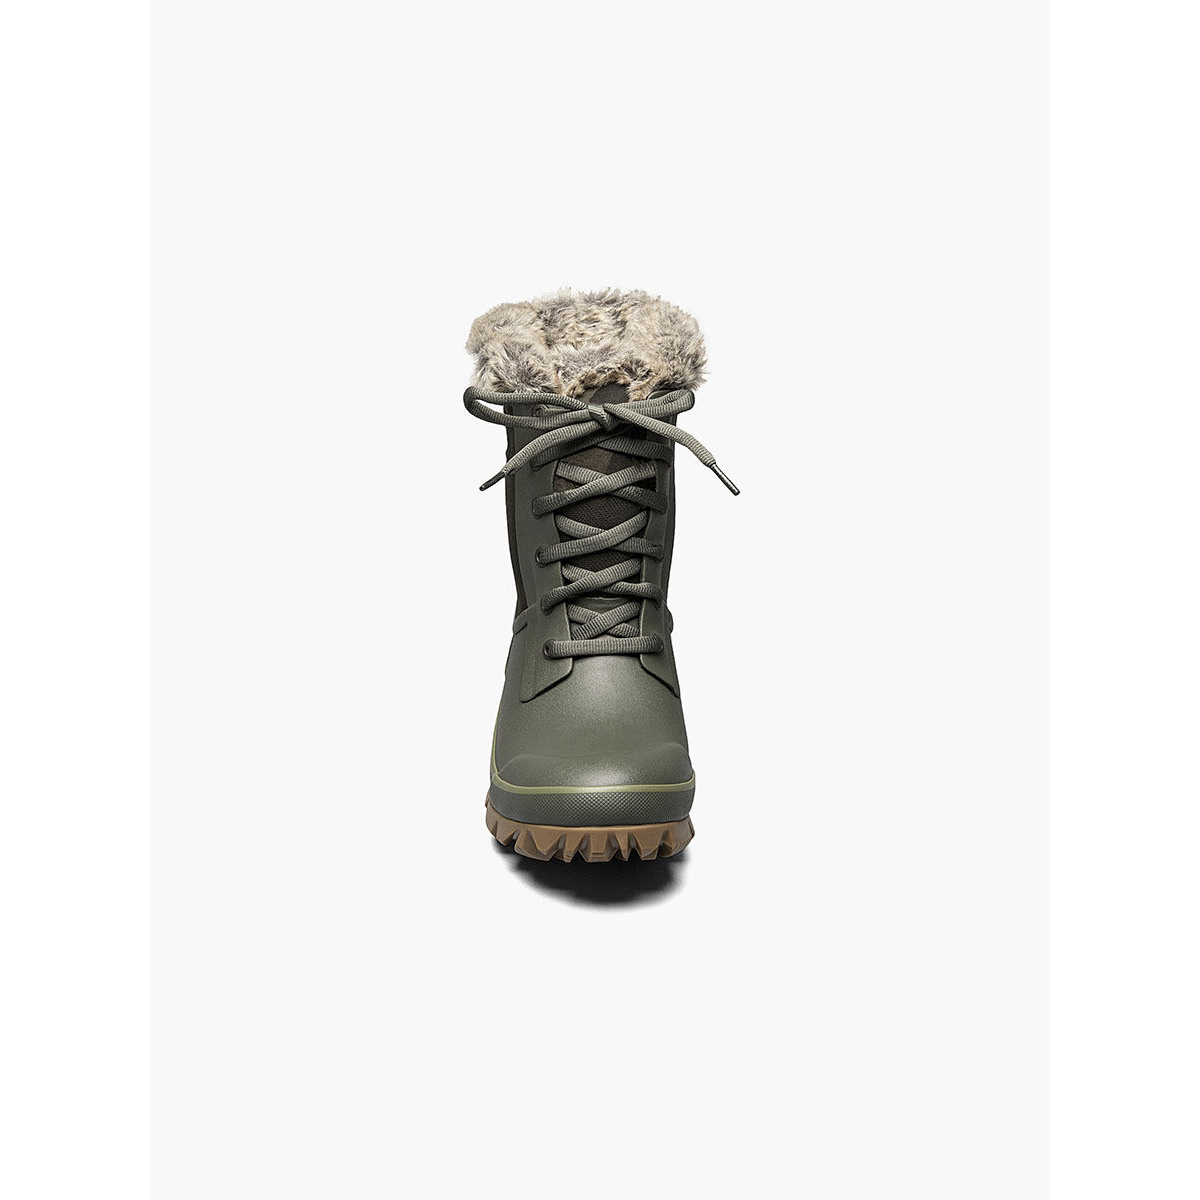 BOGS Women's Arcata Tontal Camo Waterproof Lace Up Snow Boots Dark Green - 72693-301 - Dark Green, 7